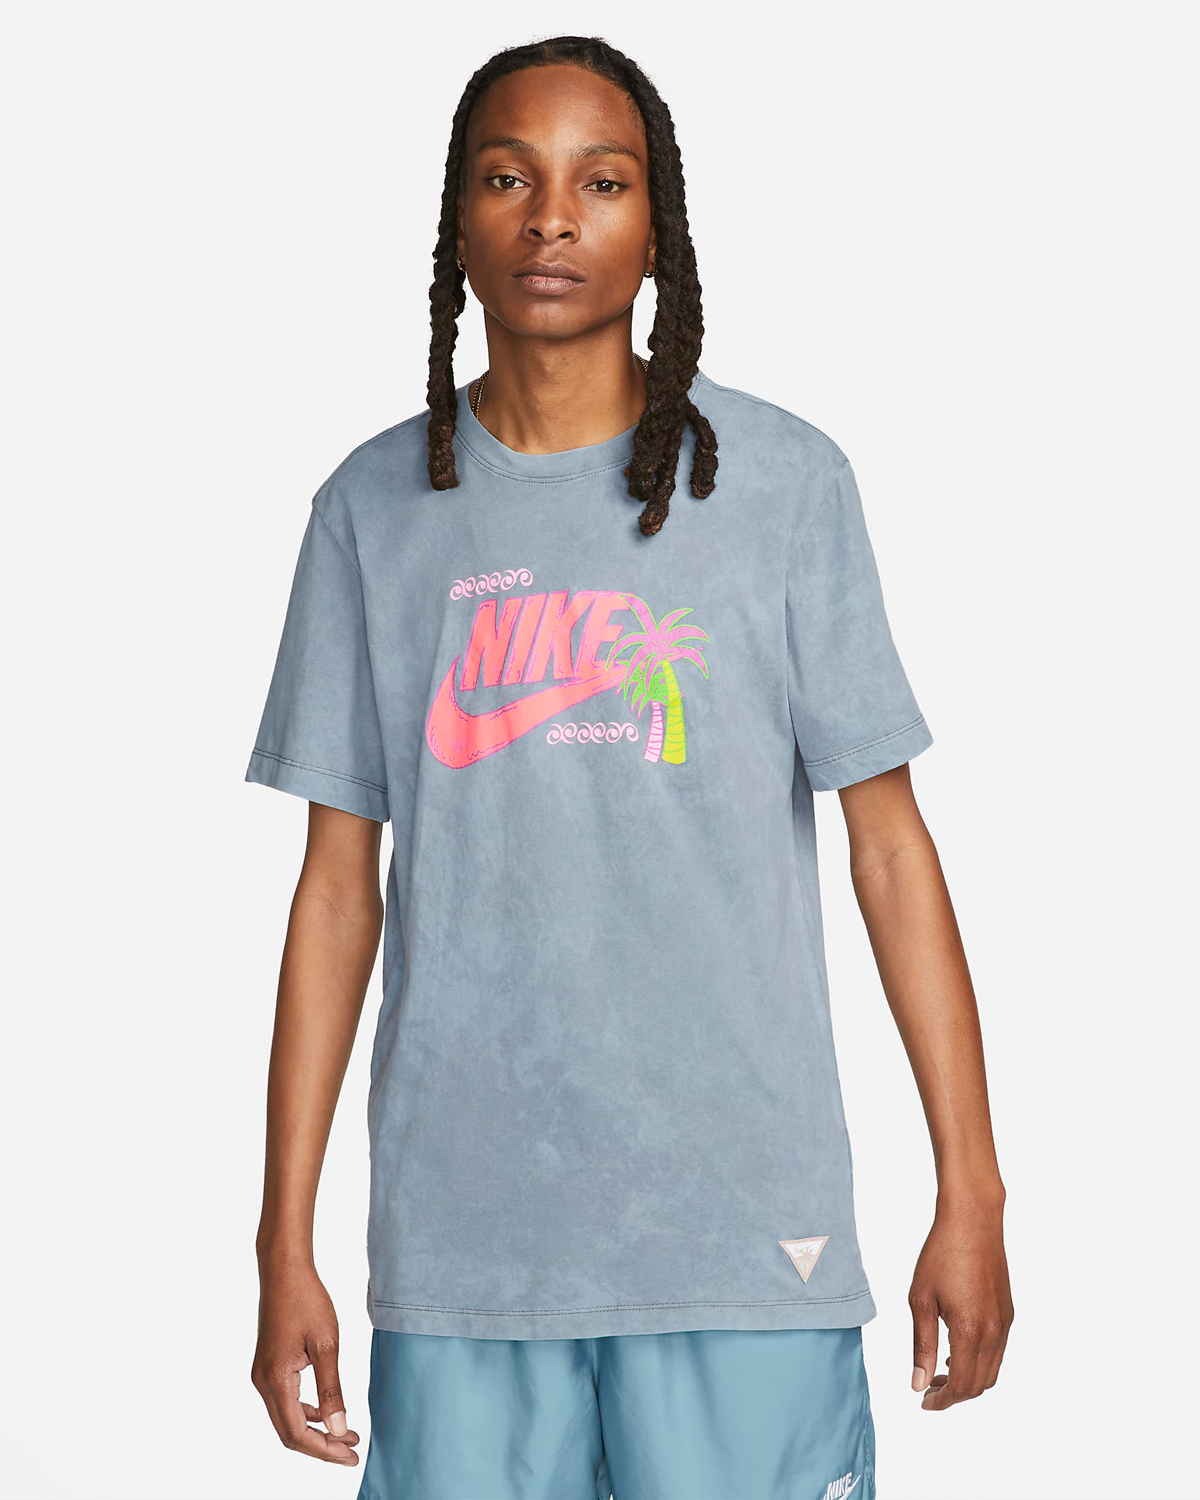 Nike-Sportswear-Cool-Grey-T-Shirt